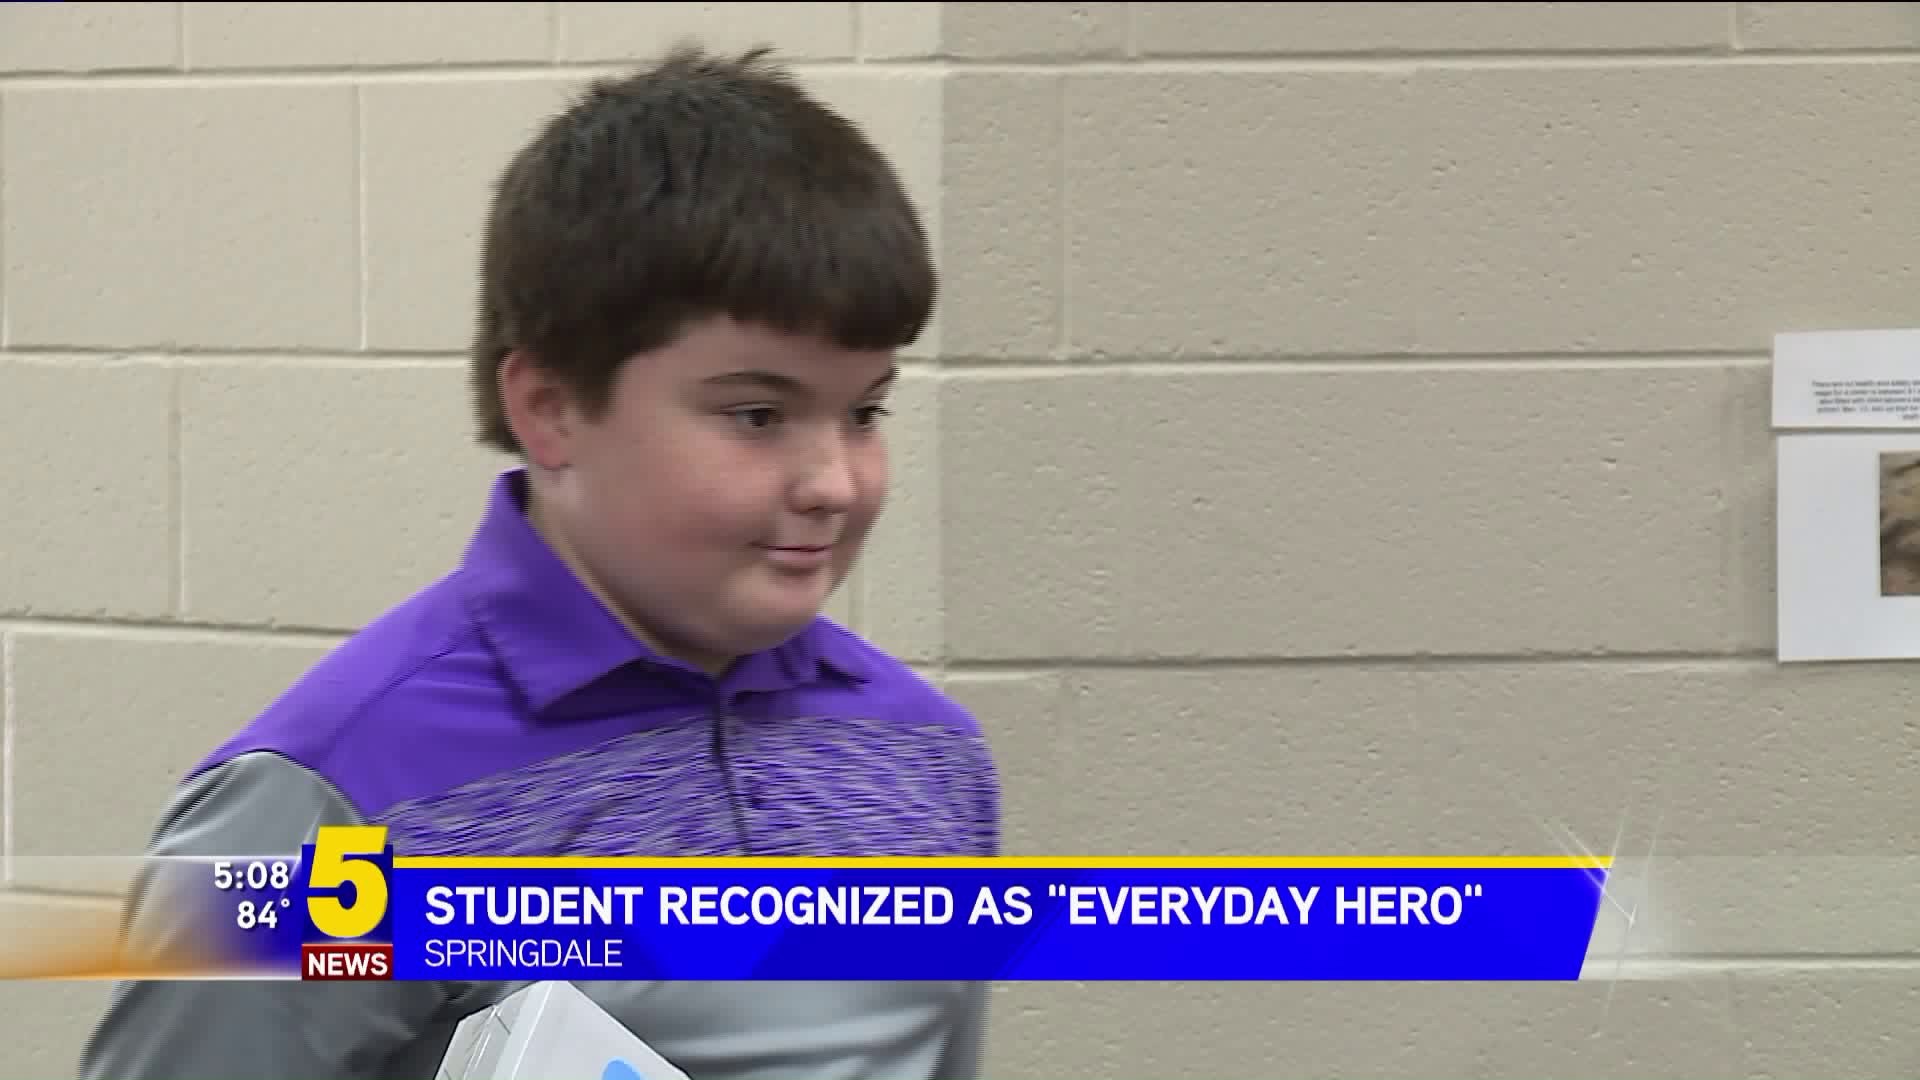 Student Recognized As "Everyday Hero"